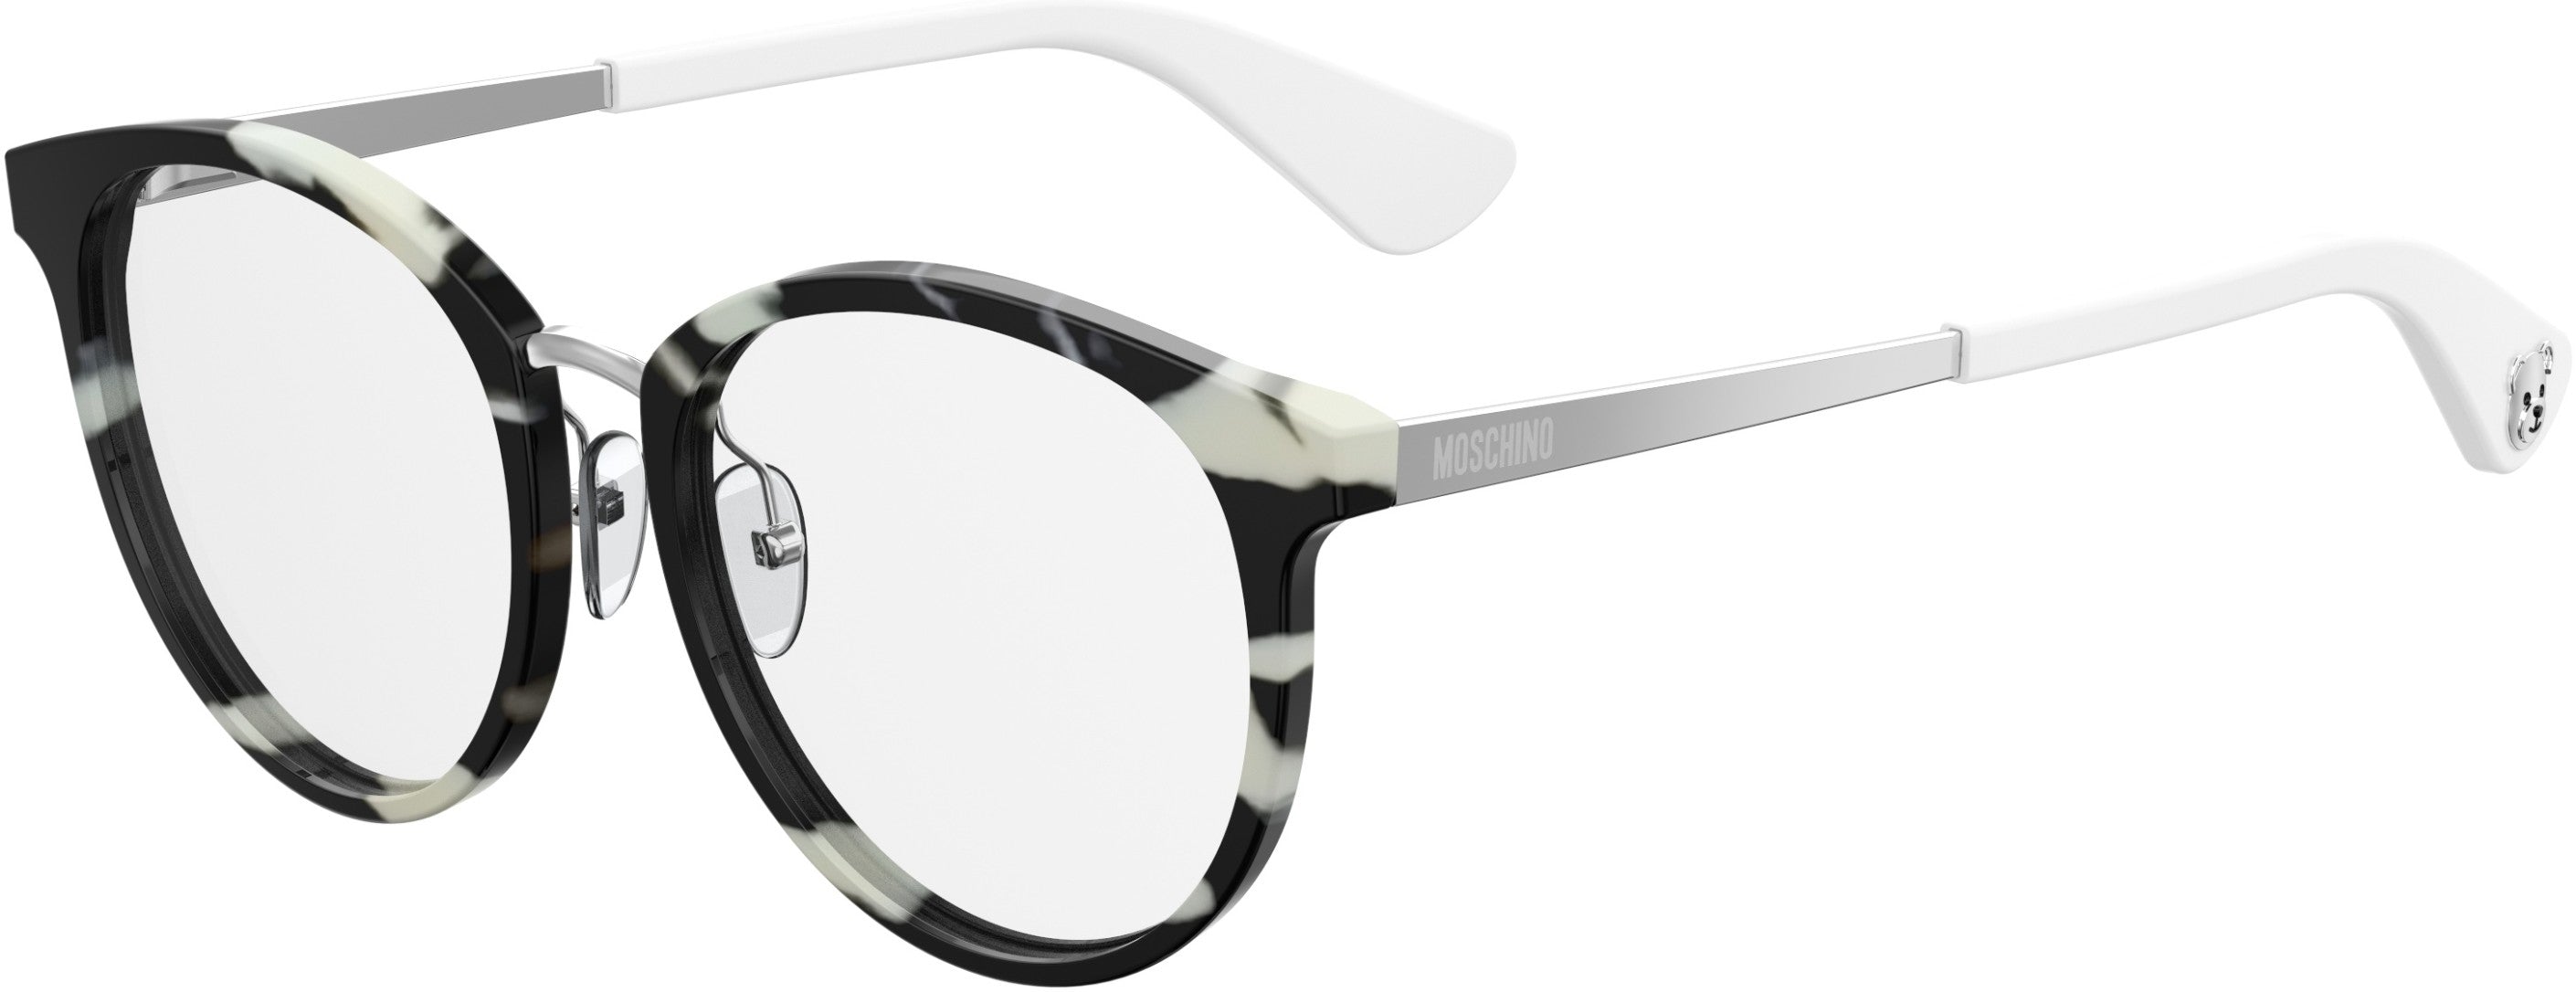  Moschino 507 Oval Modified Eyeglasses 0WR7-0WR7  Black Havana (00 Demo Lens)